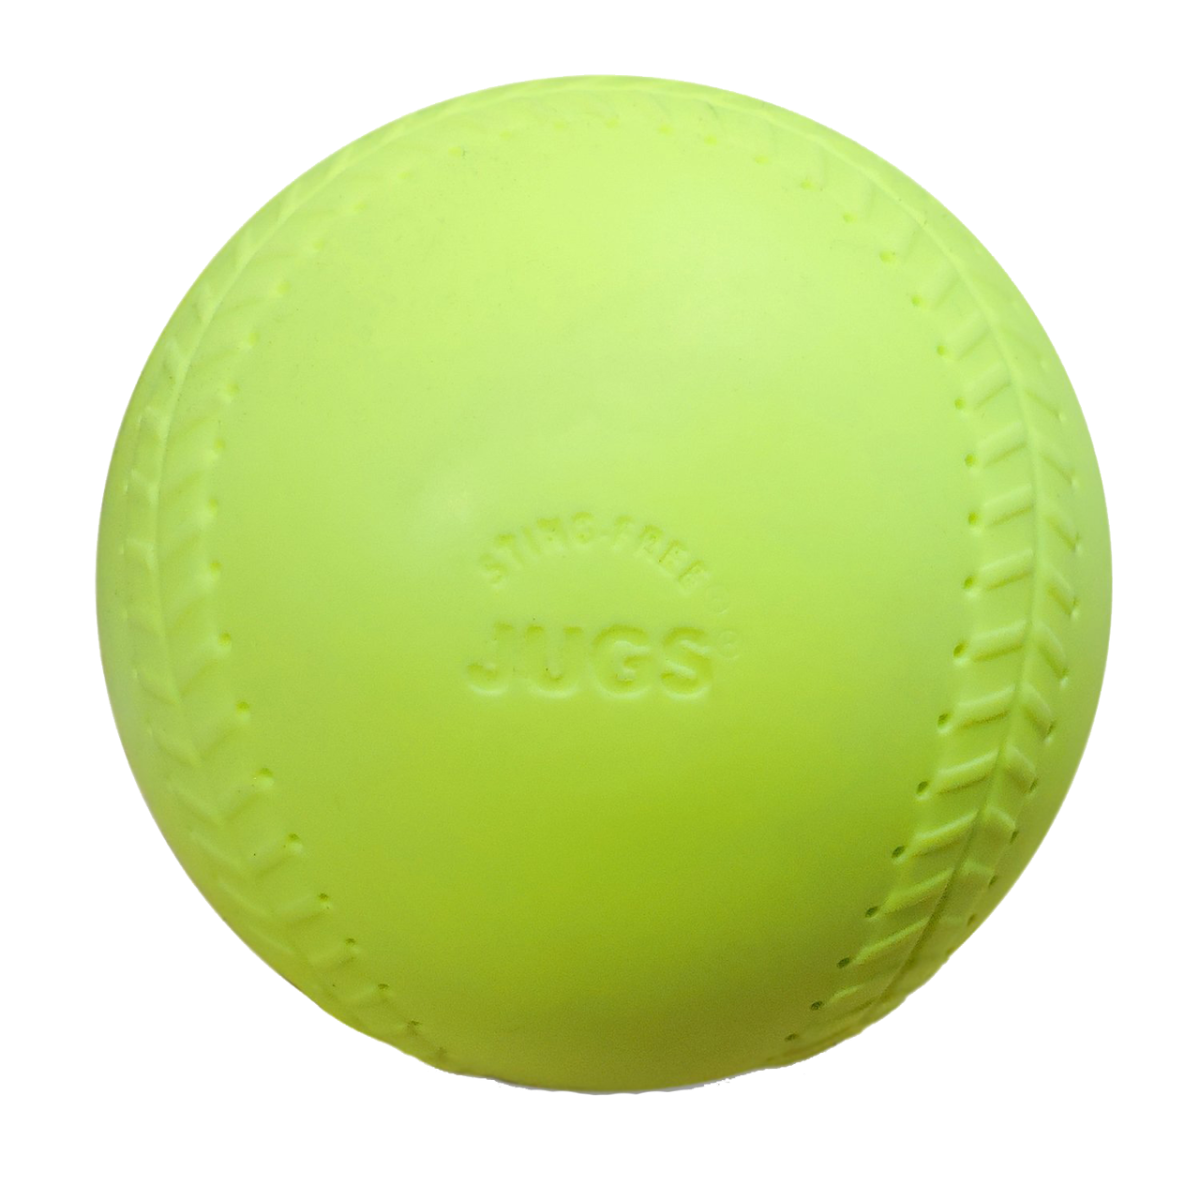 Jugs Sting Free Softball - 12" Optic Game-Ball Yellow Seamed